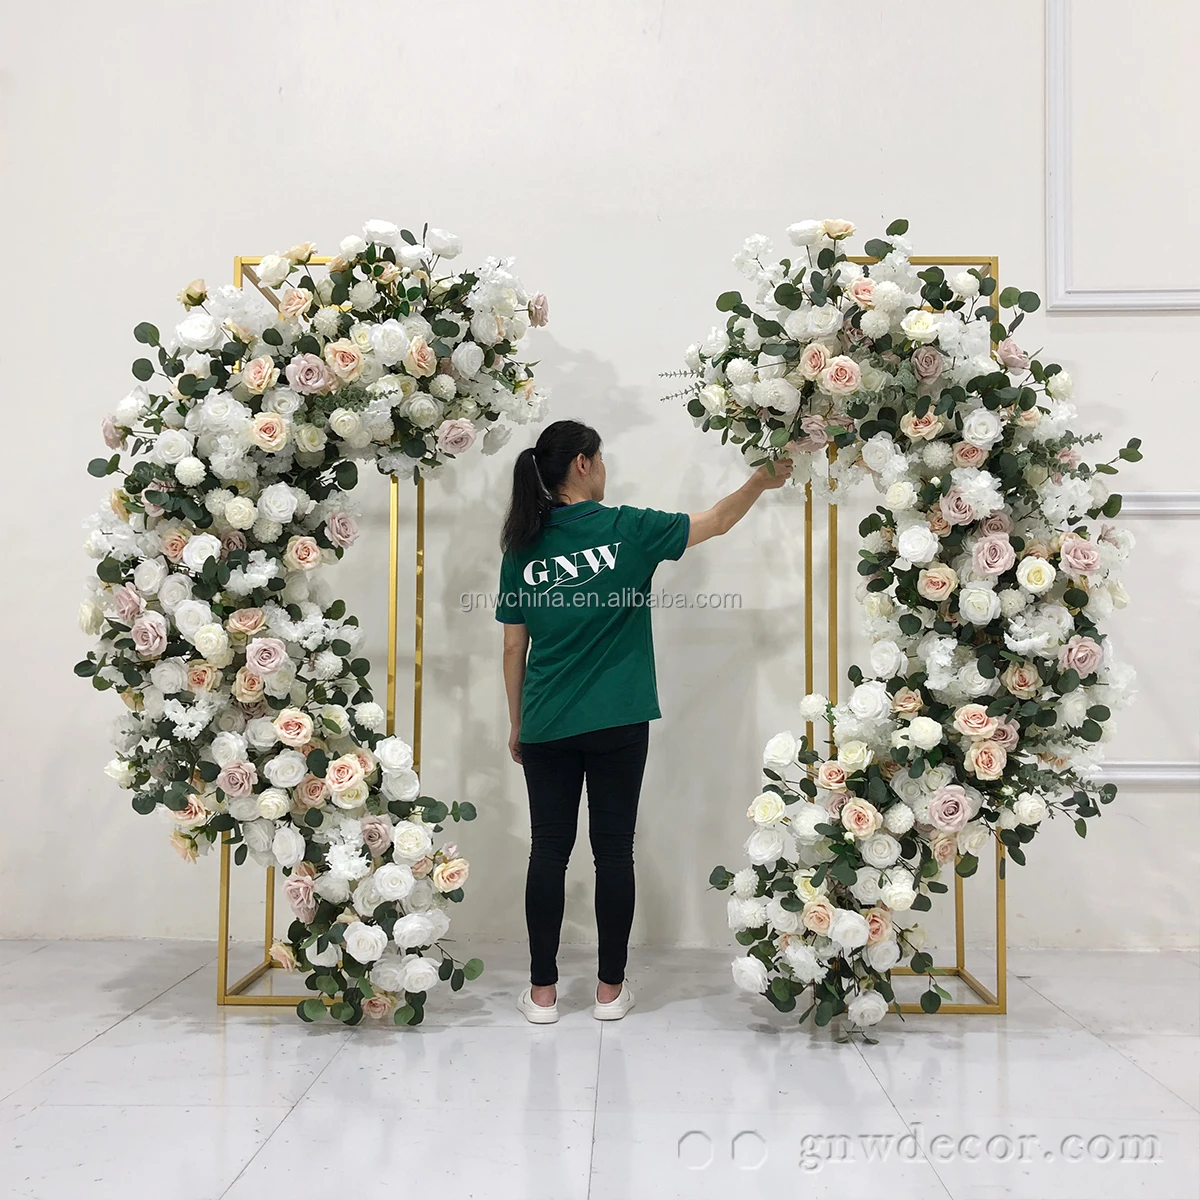 

GNW Customized Artificial Flower Half Moon Shape Garland Arch Decorative Wedding White Pink Rose Flower Arch